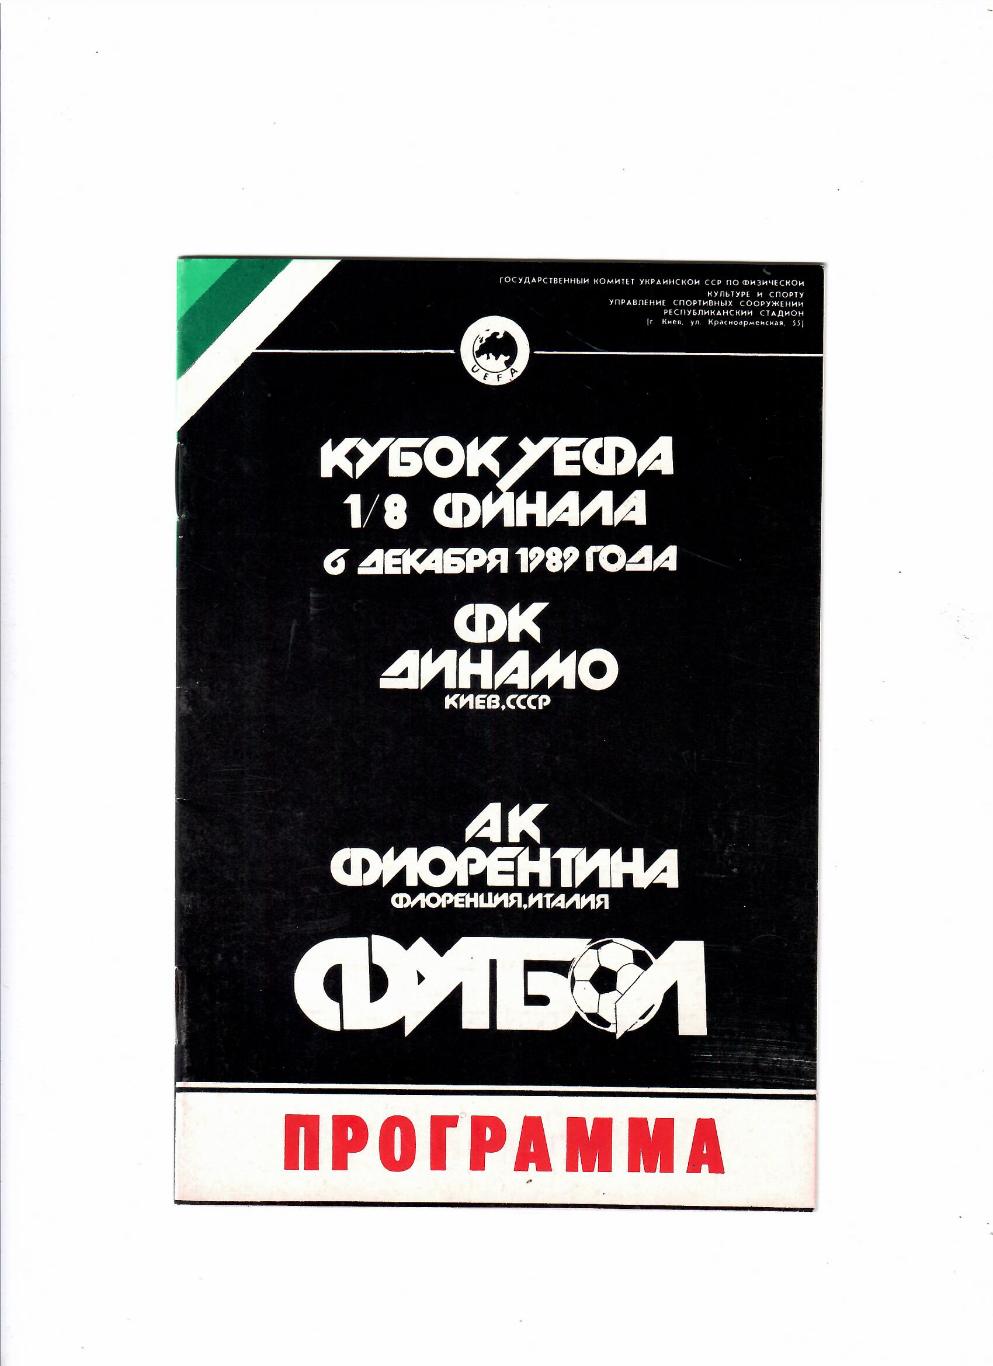 Динамо Киев-Фиорентина Италия 1989